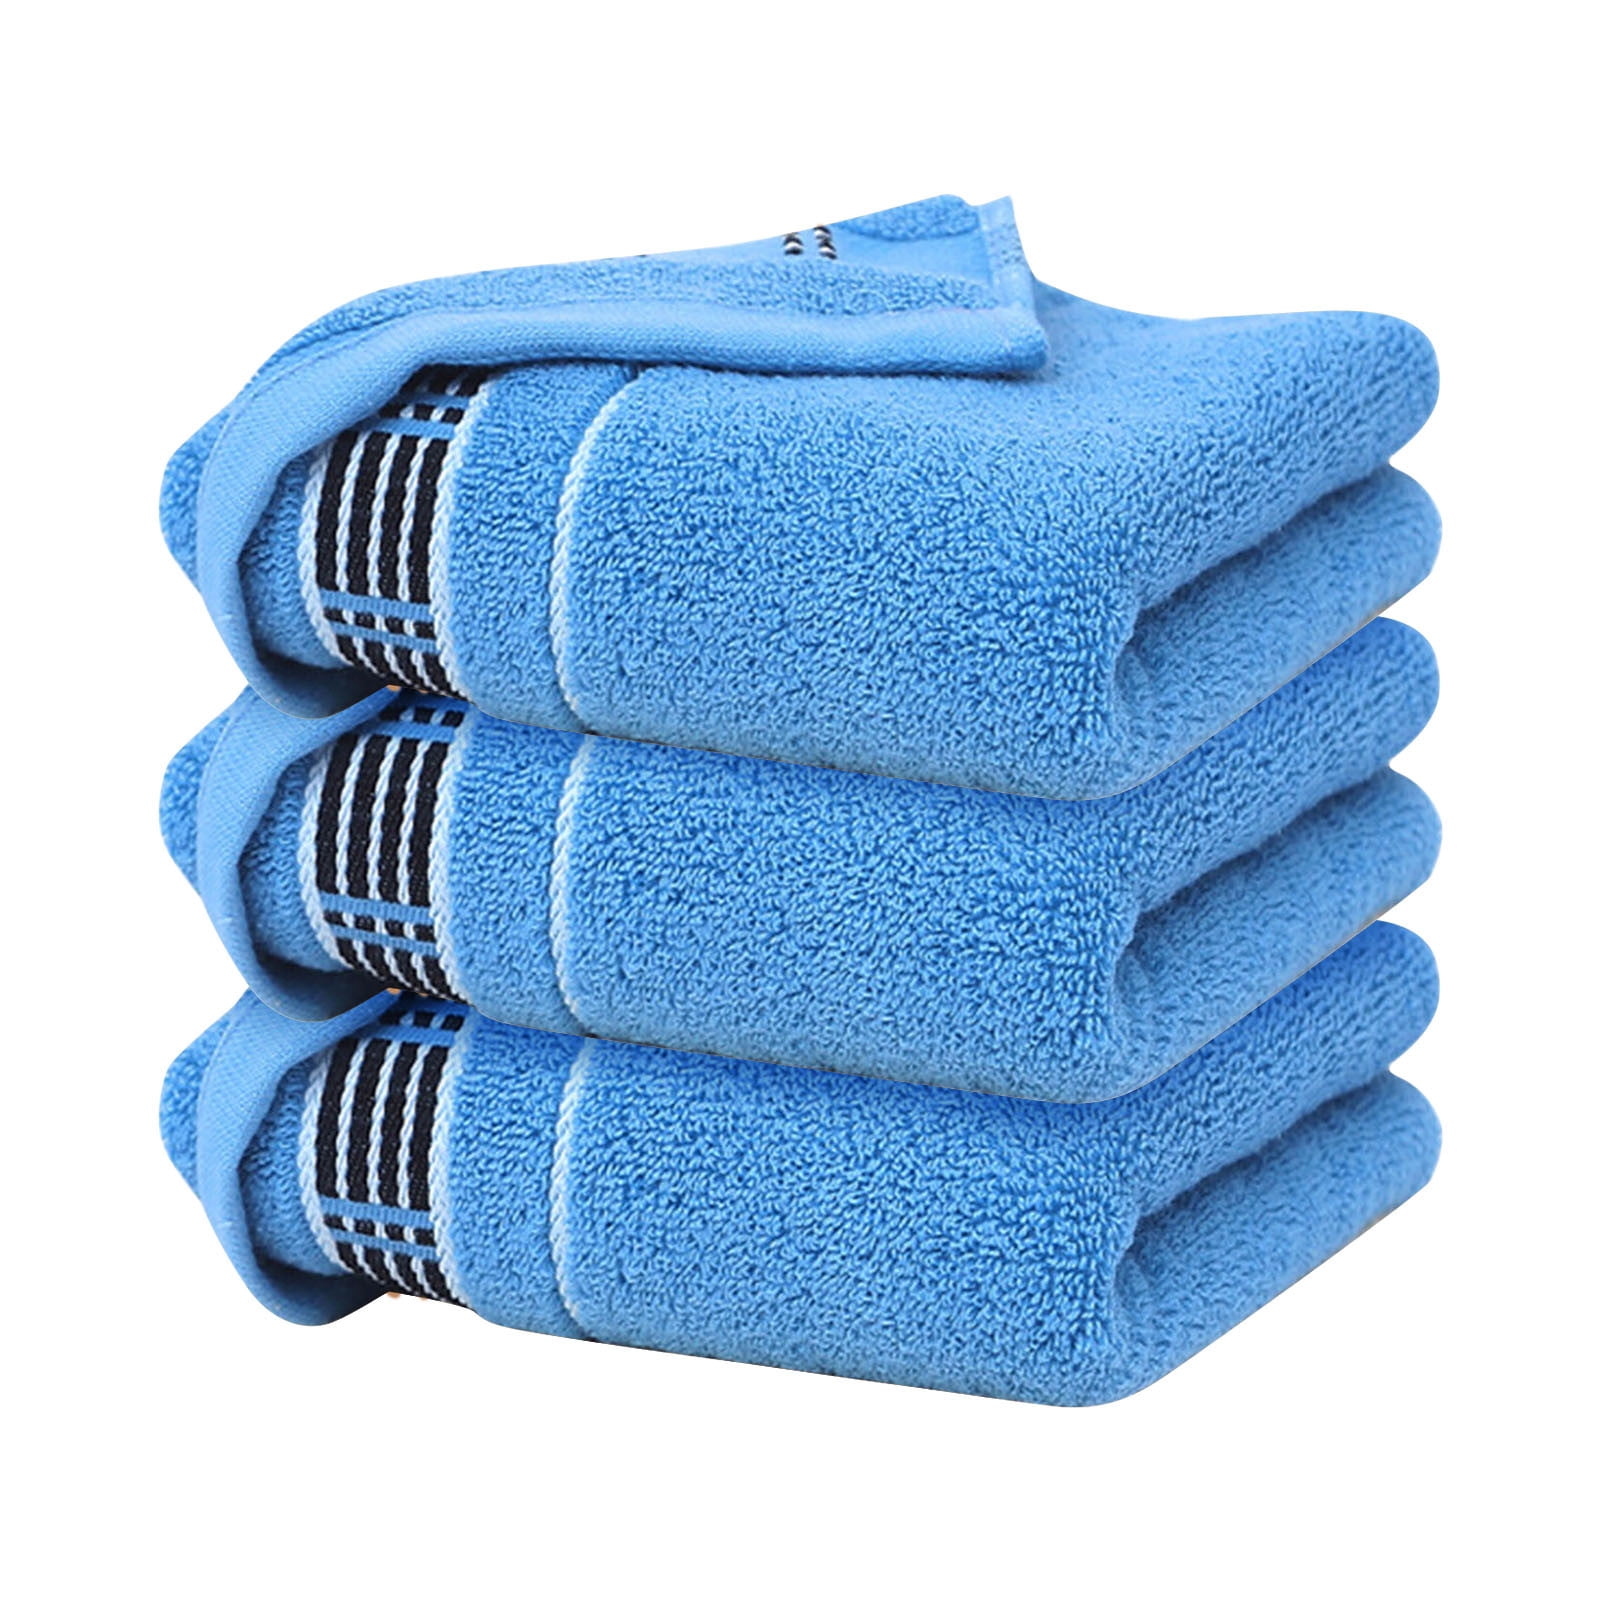 City Bath Towel, Turmeric – Be Home